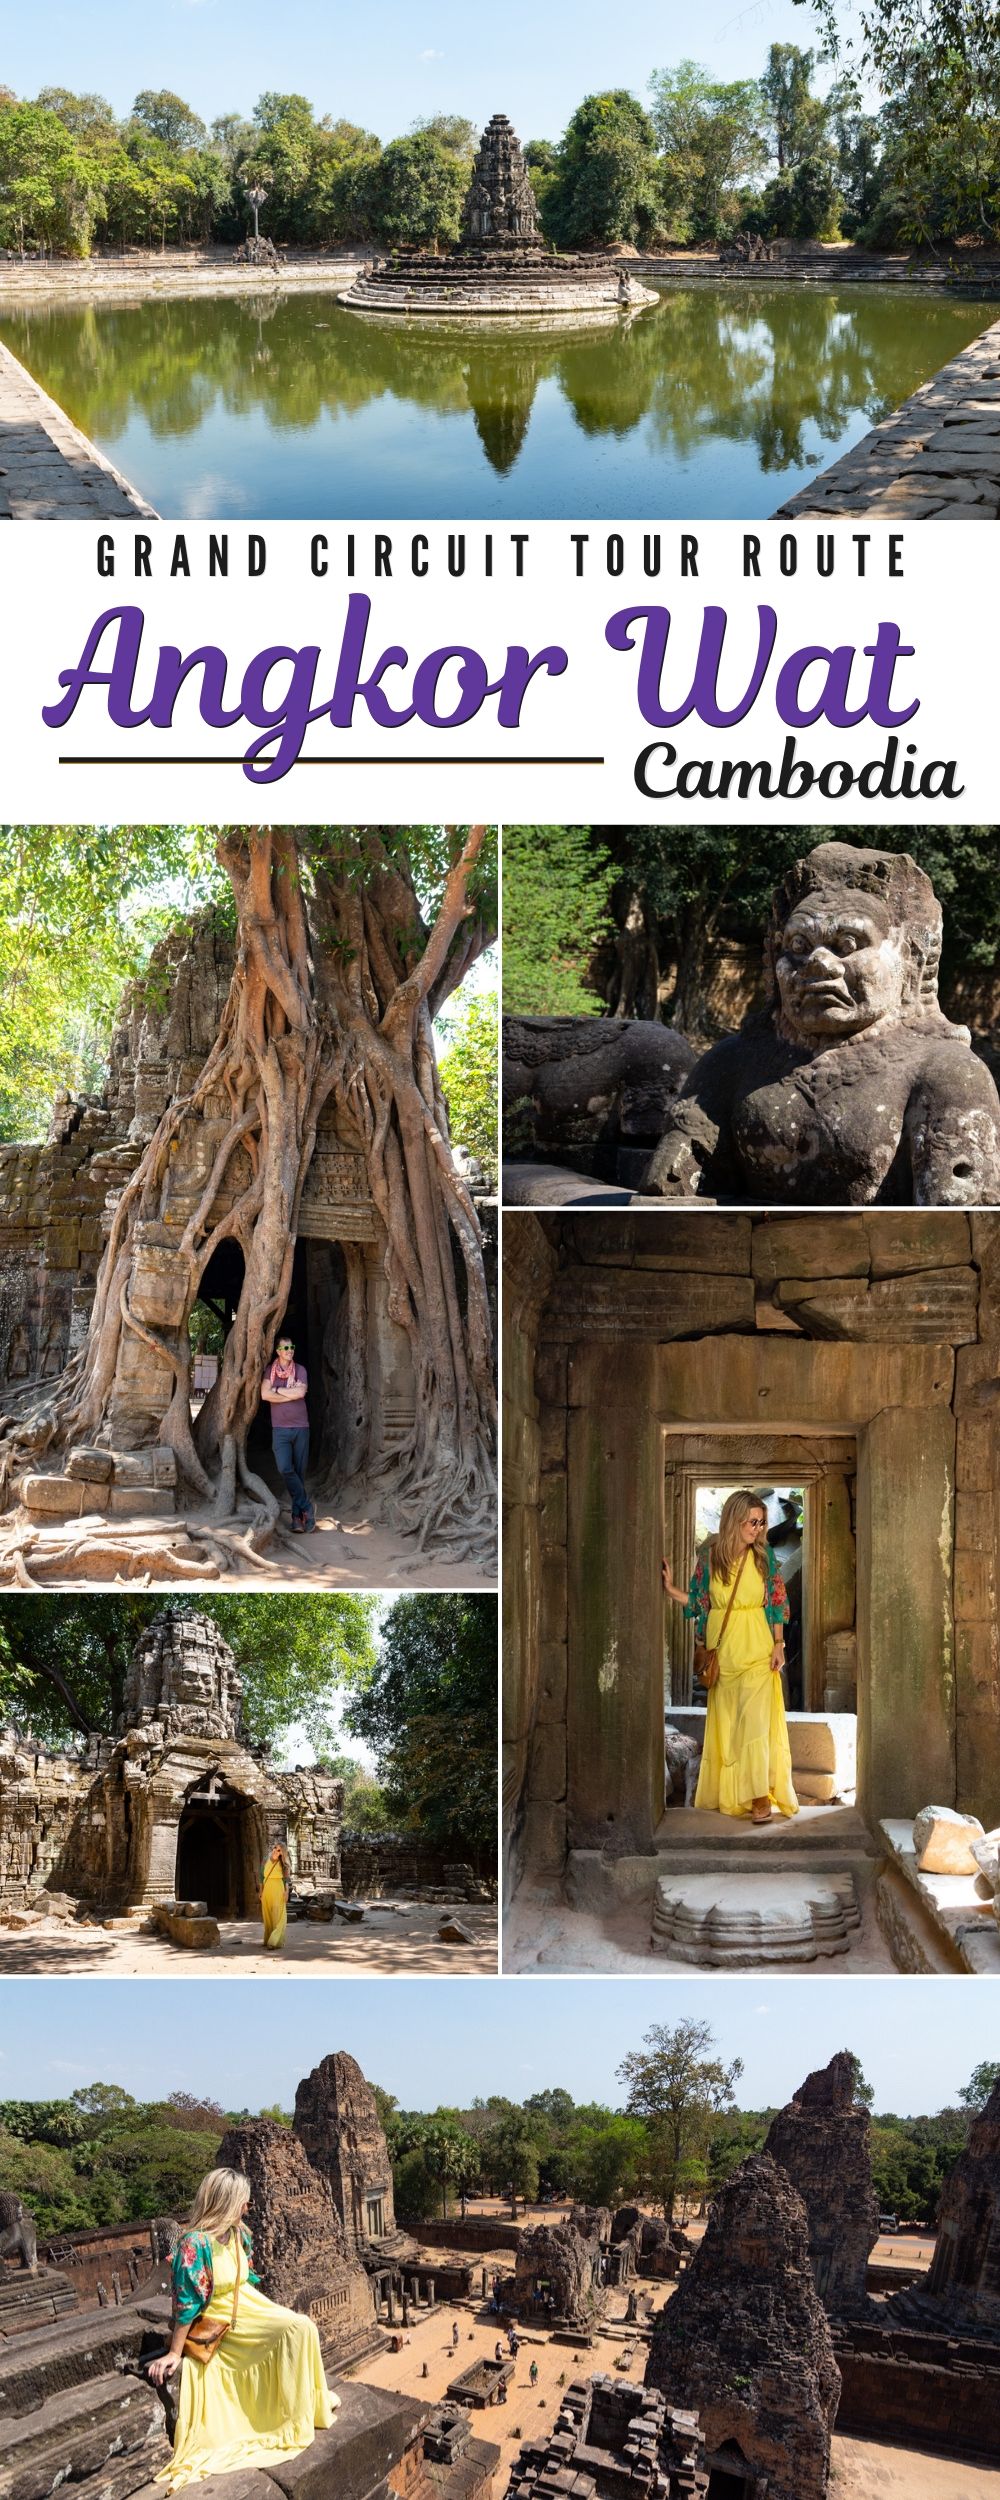 Angkor Wat Grand Circuit Tour Route